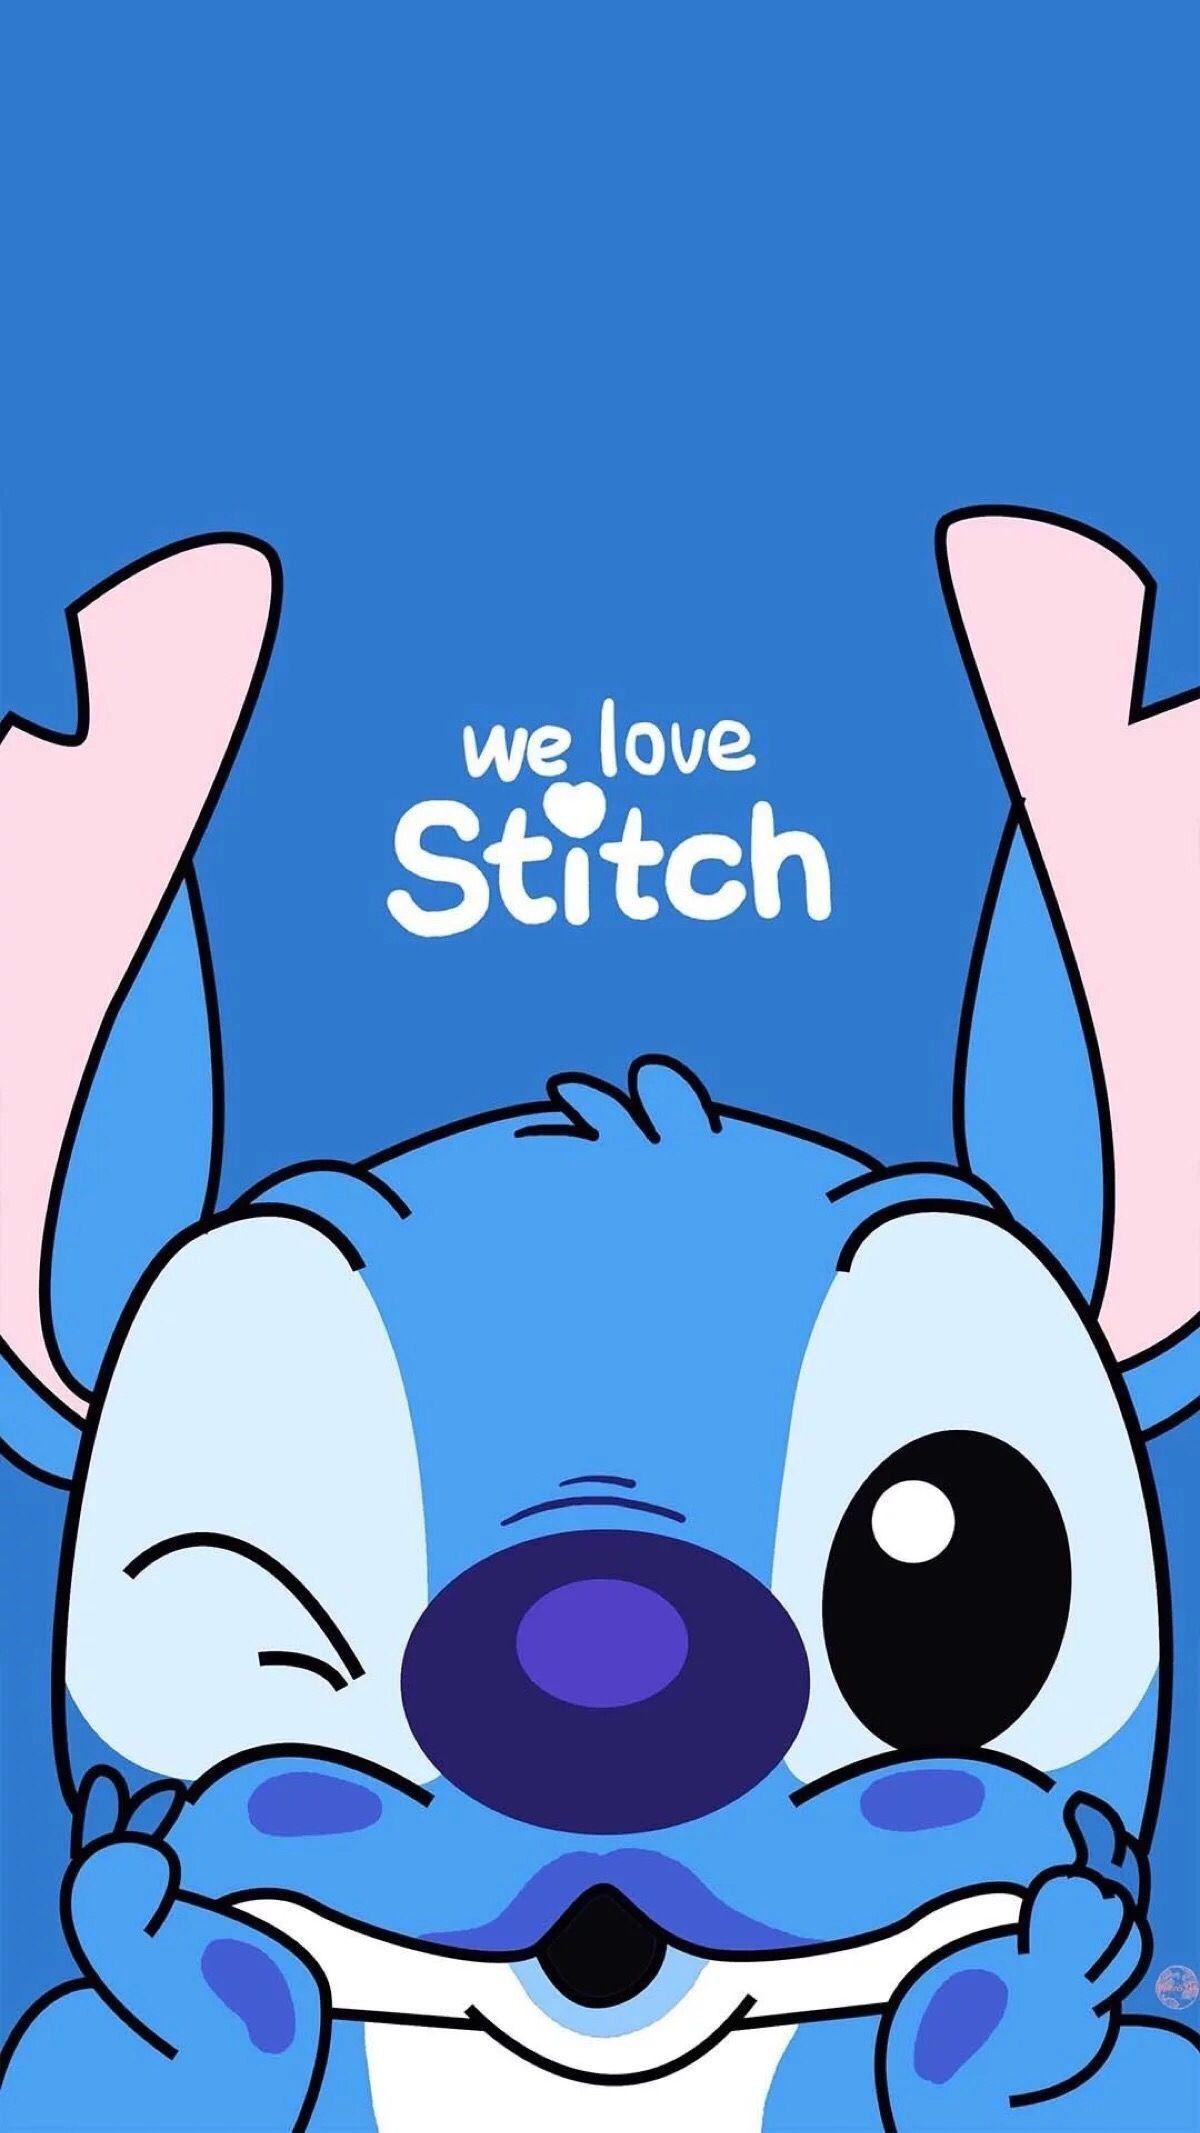 We love stitch